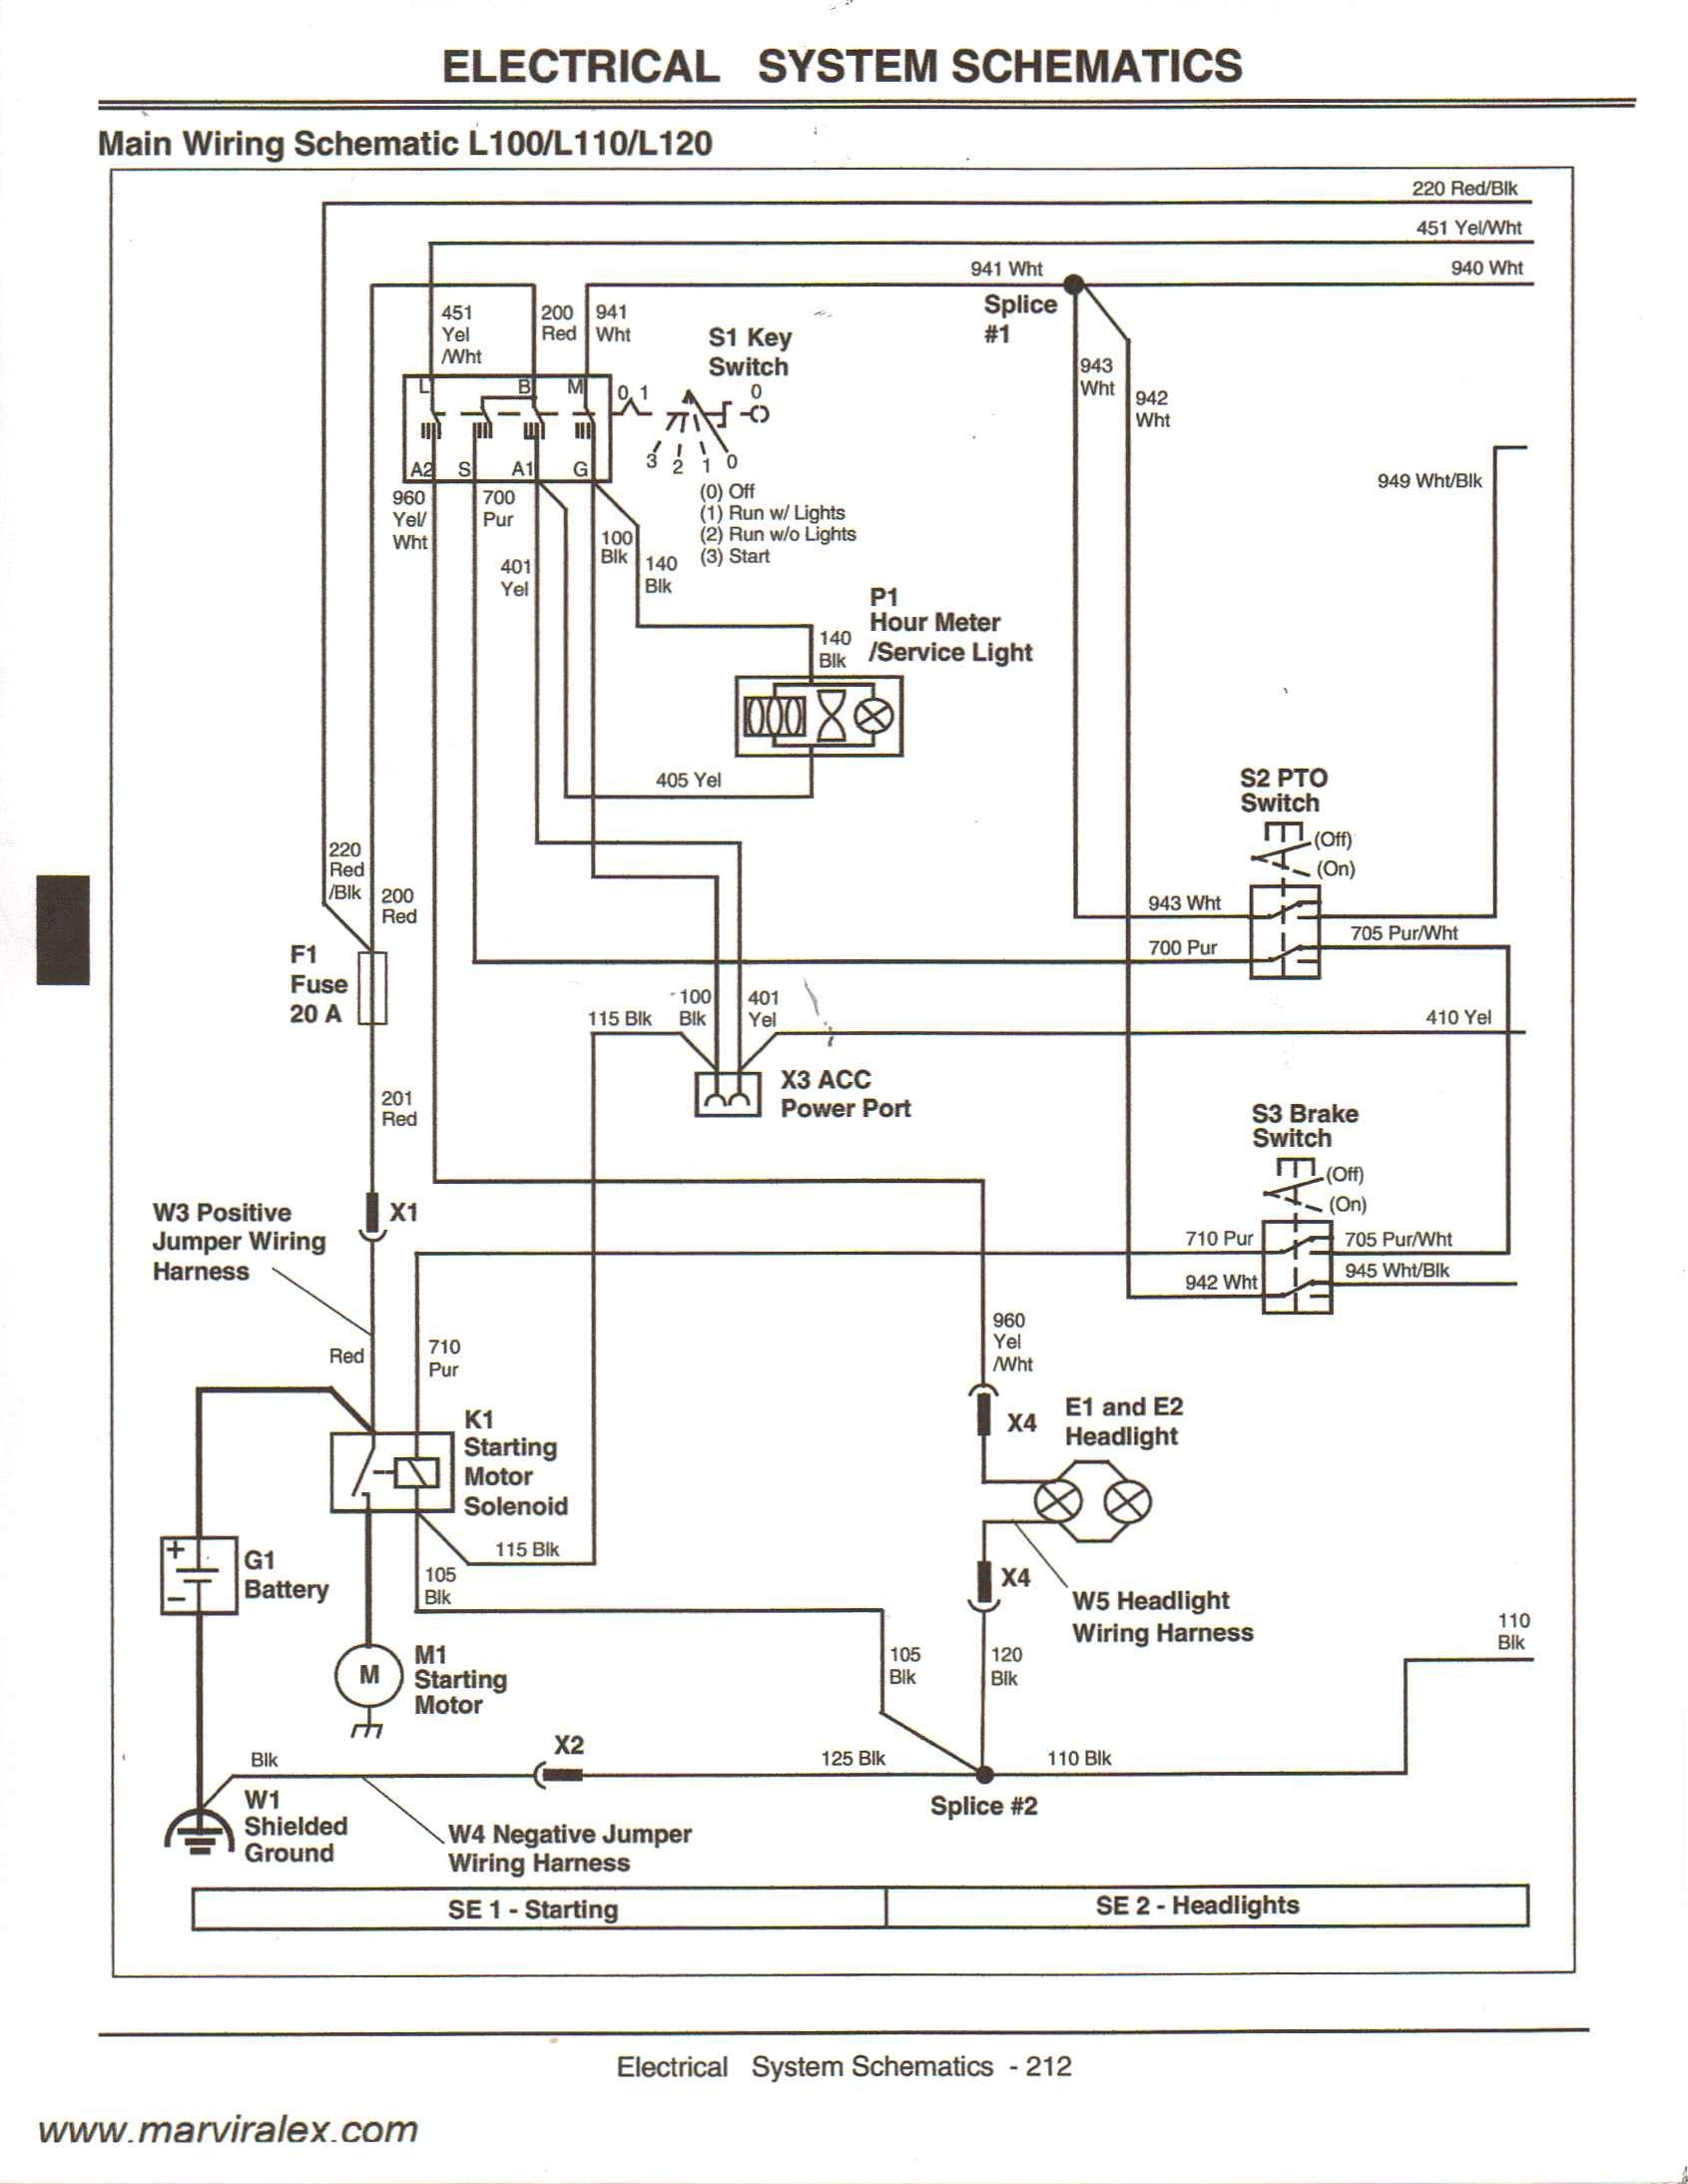 John Deere Electrical Schematic Pto Switch Wiringagram Pdf Ignition 318 Wiring Diagram Dimension 1920